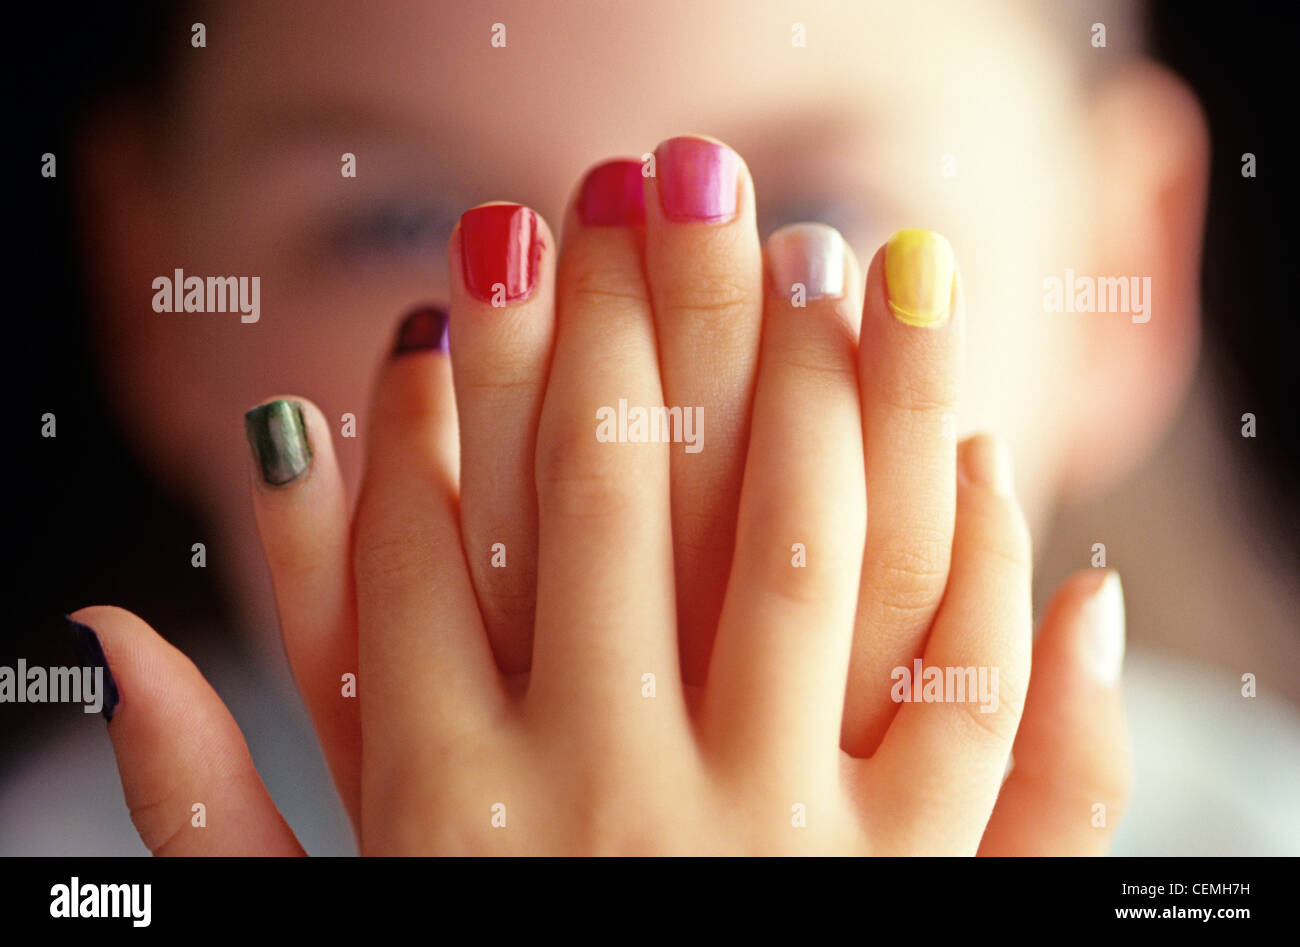 Mehrfarbige nägel -Fotos und -Bildmaterial in hoher Auflösung – Alamy